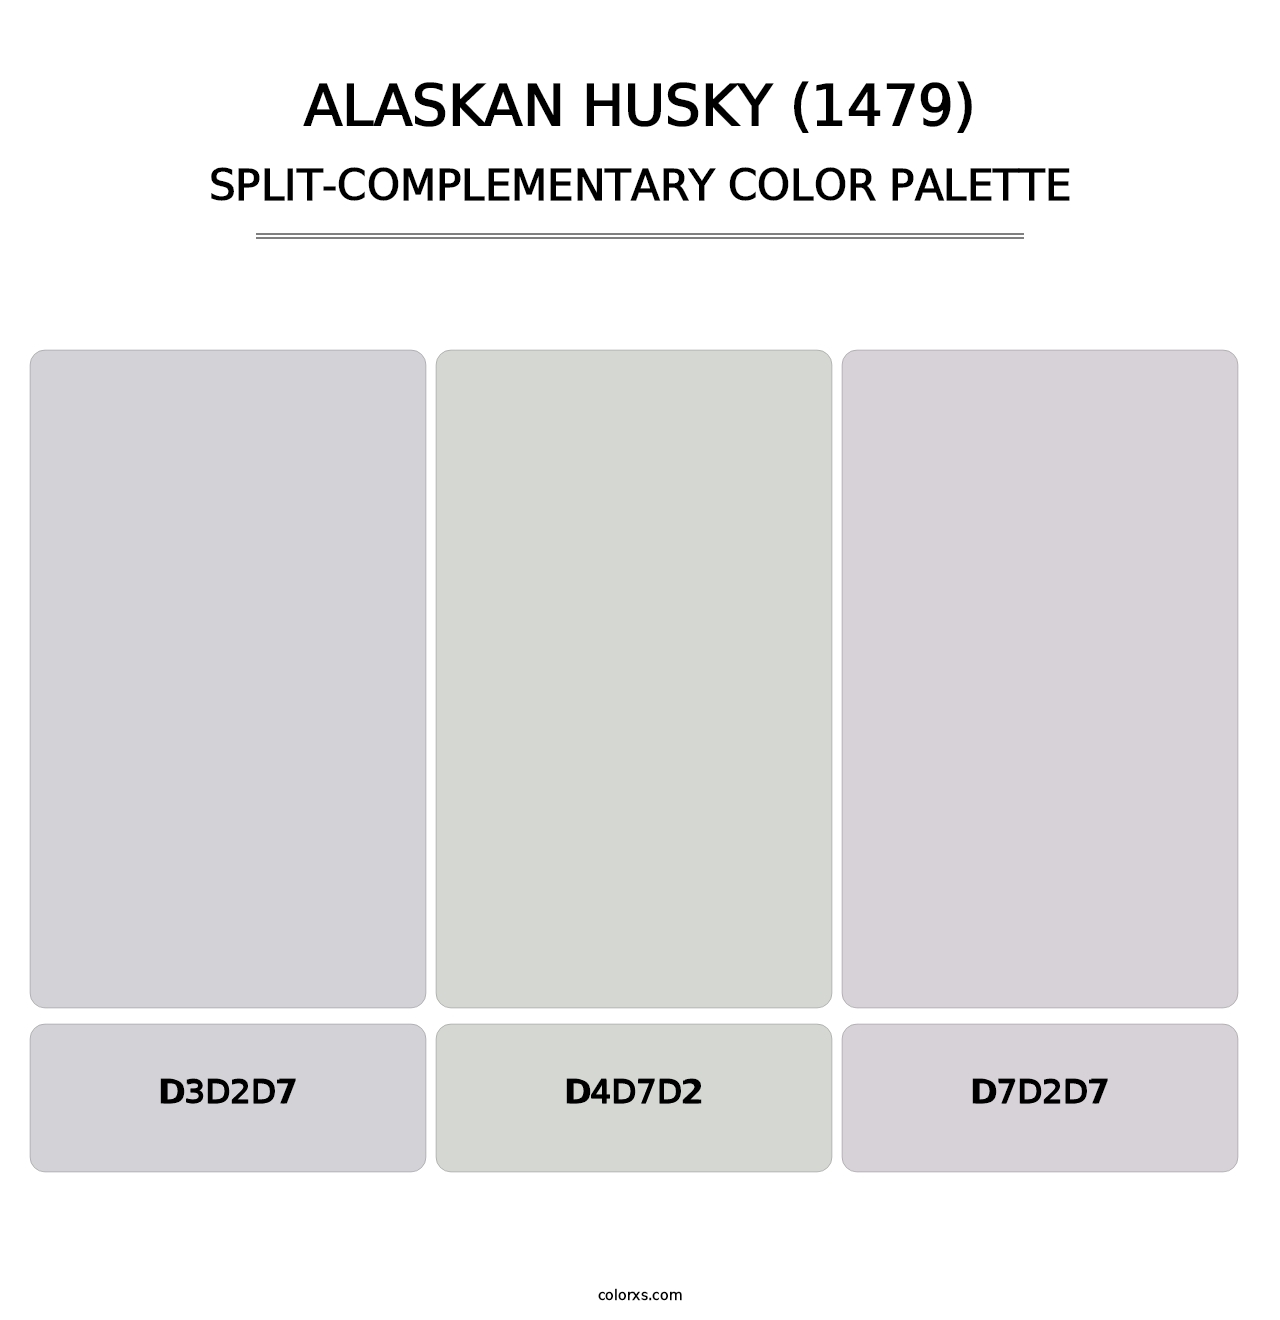 Alaskan Husky (1479) - Split-Complementary Color Palette